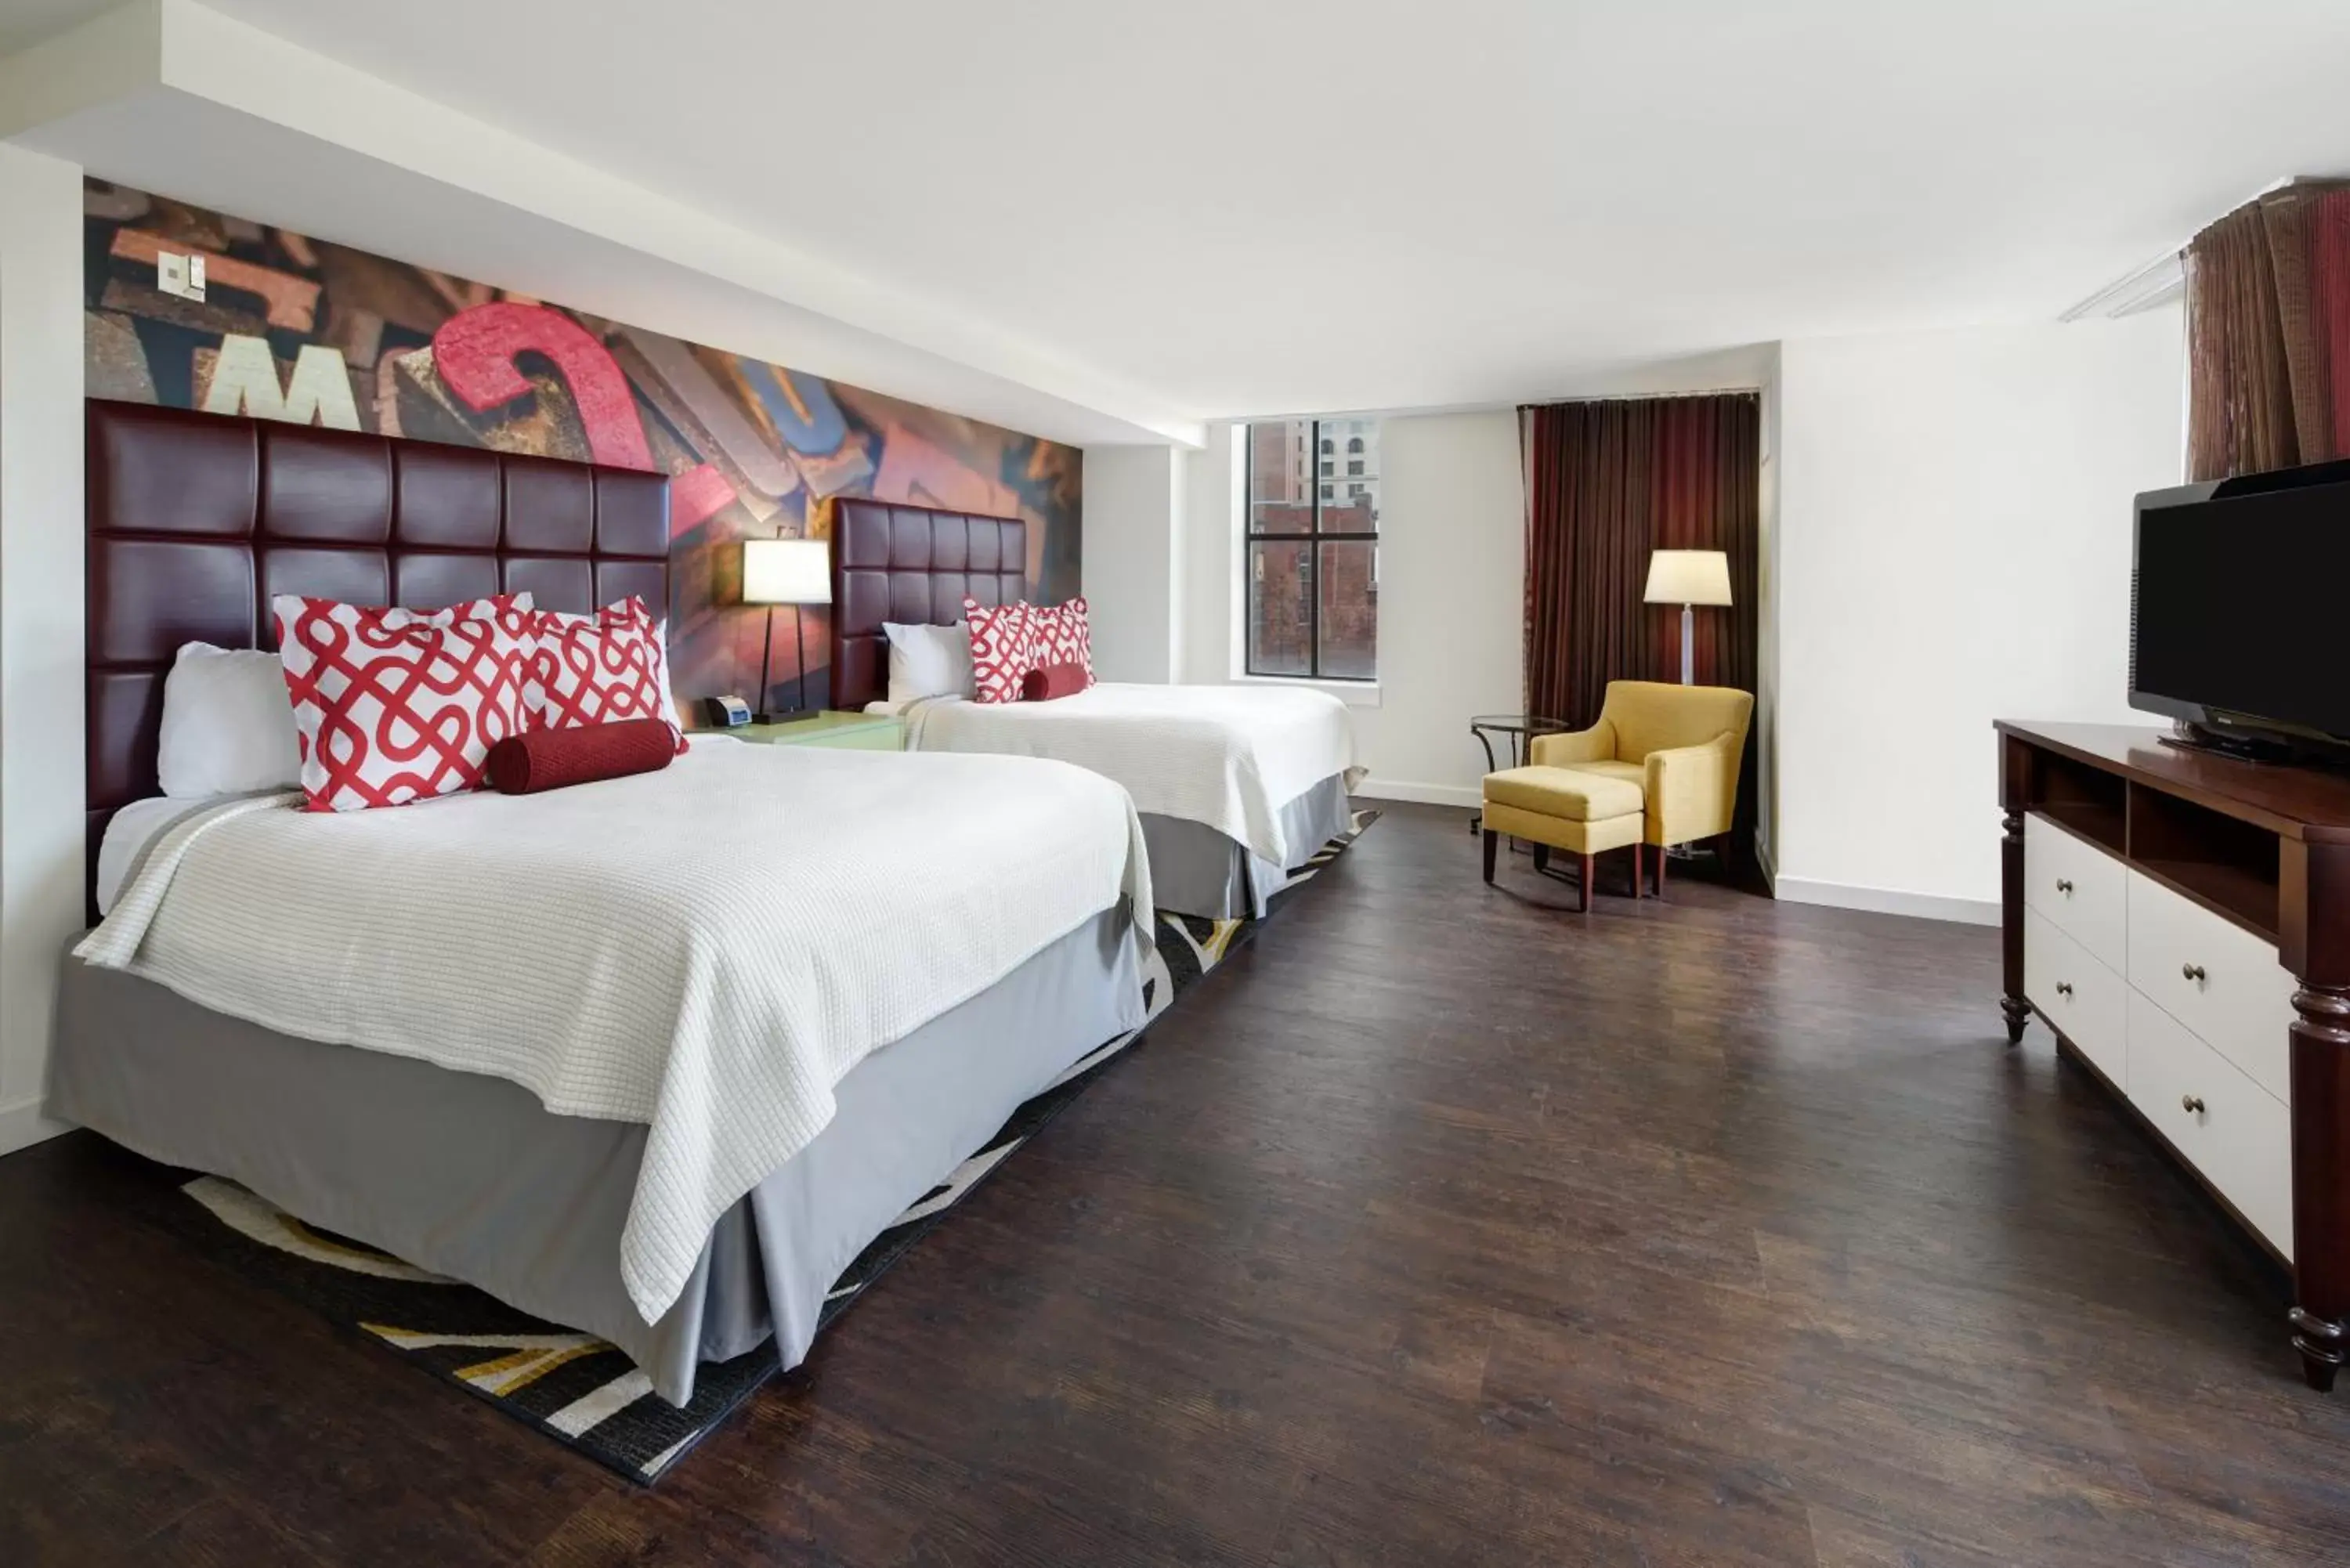 Photo of the whole room in Hotel Indigo Nashville - The Countrypolitan